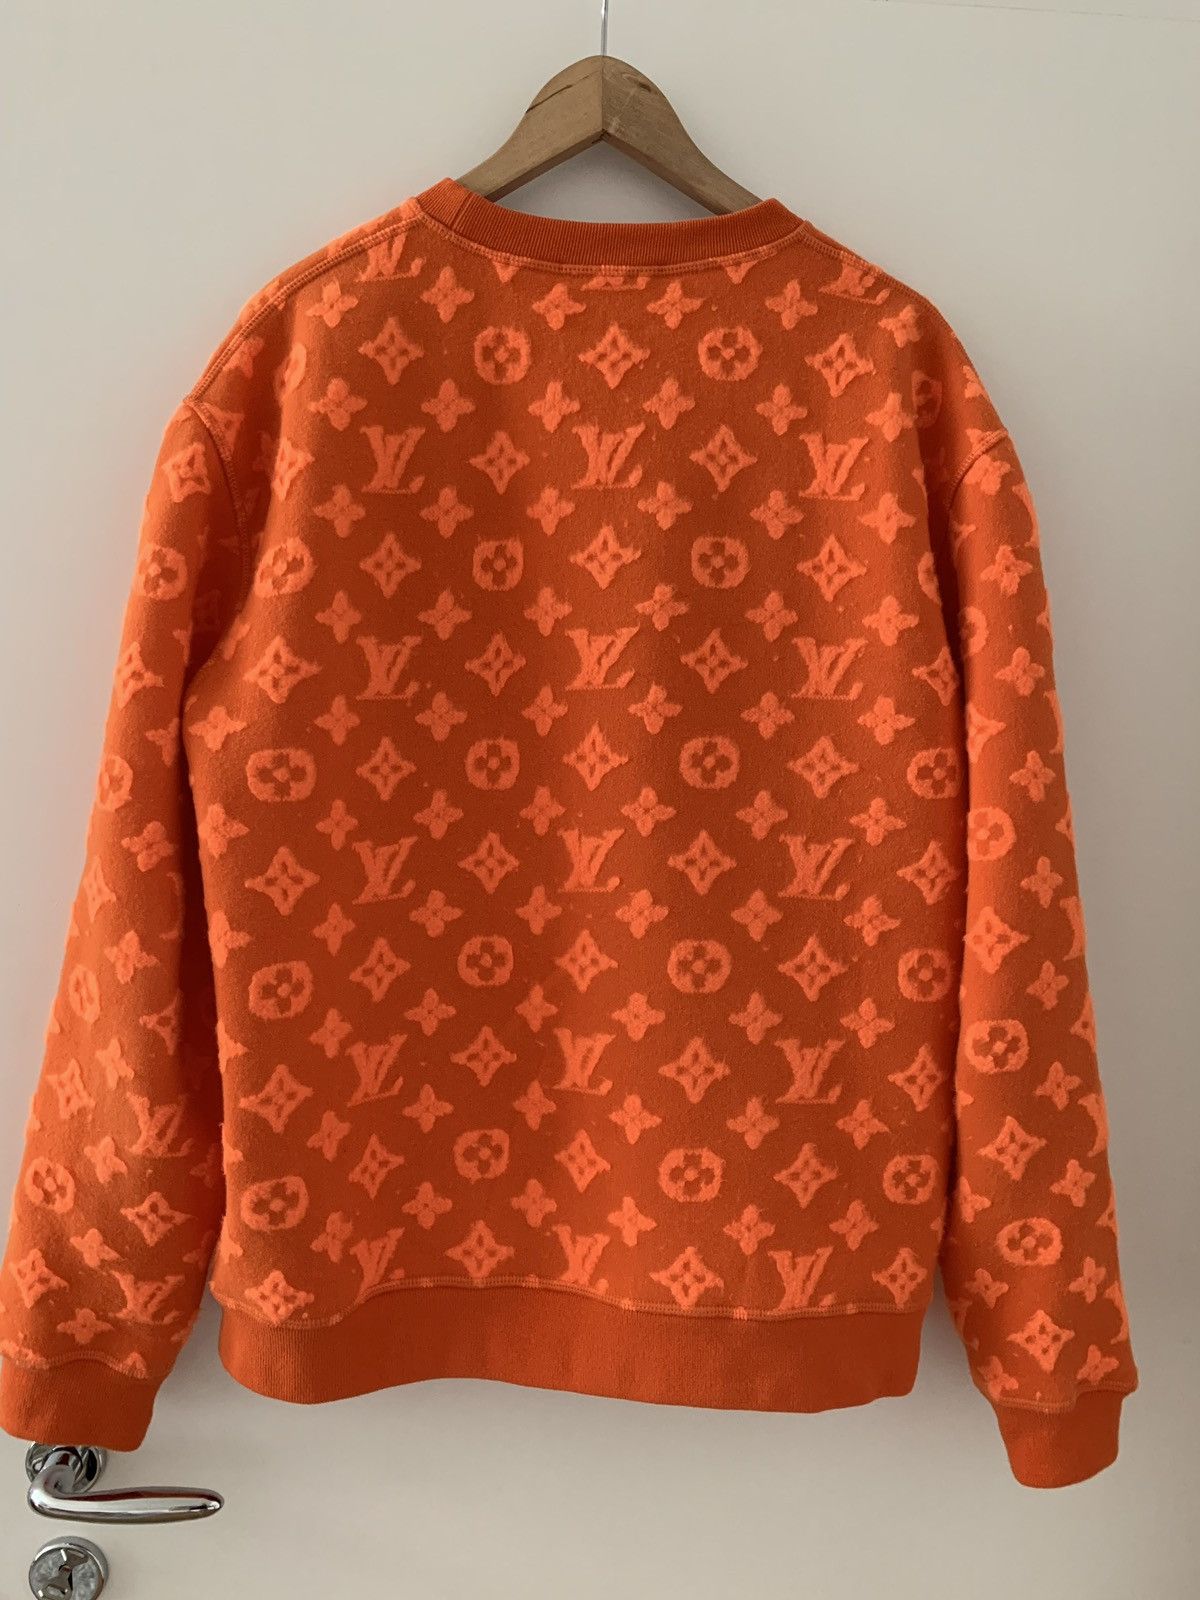 Louis Vuitton LV Orange Monogram Sweater Pre Fall 19 Size US M / EU 48-50 / 2 - 2 Preview